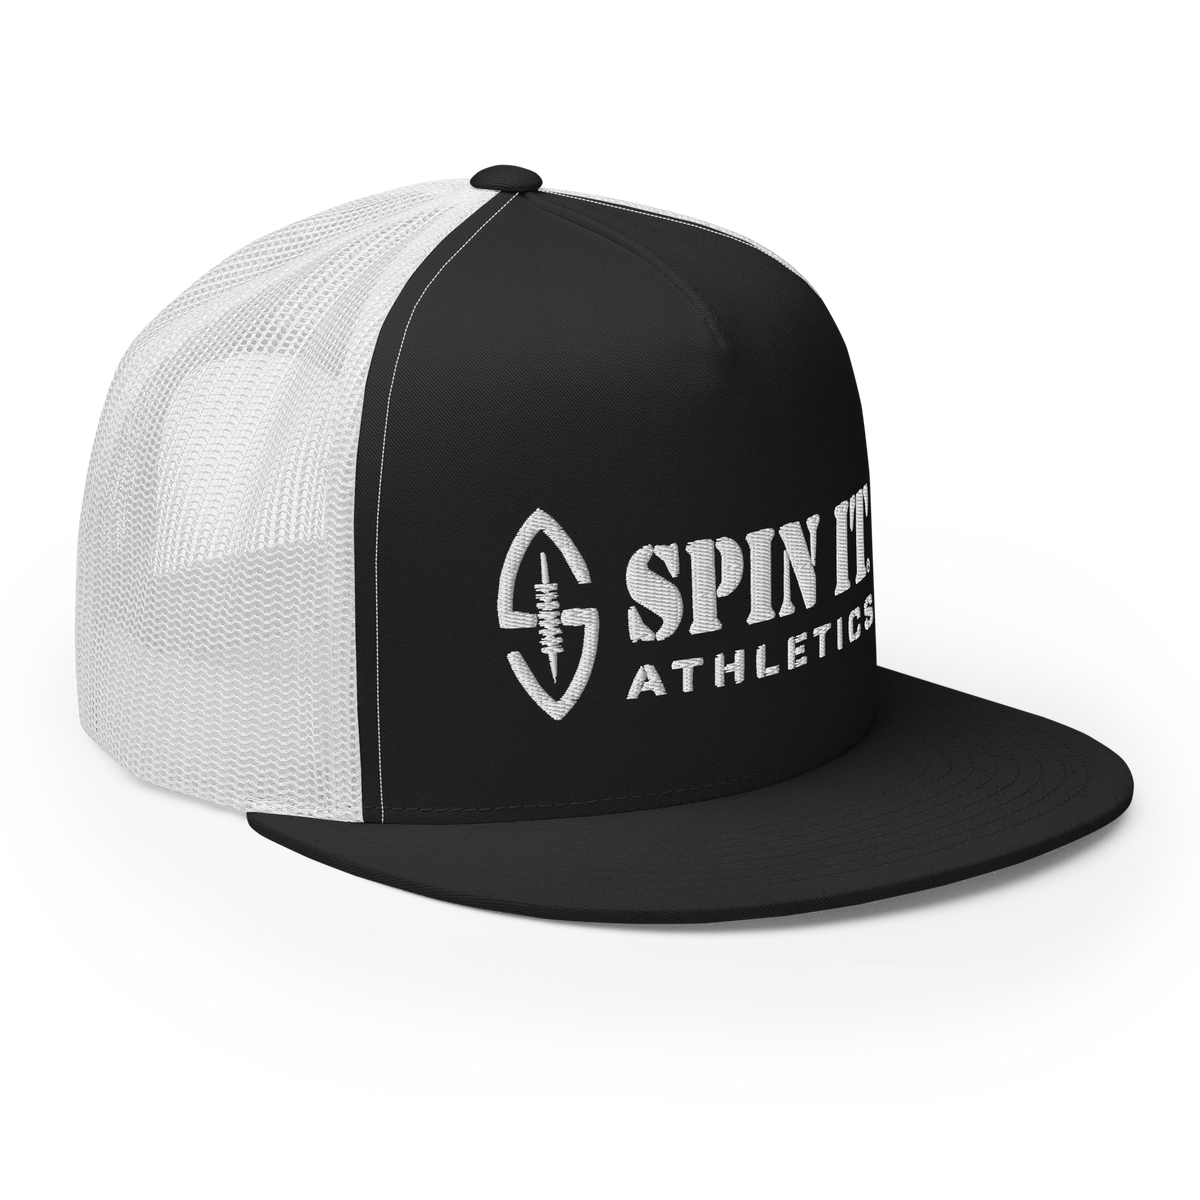 Spin It Black/White Flat Brim Hat - Living Easy®